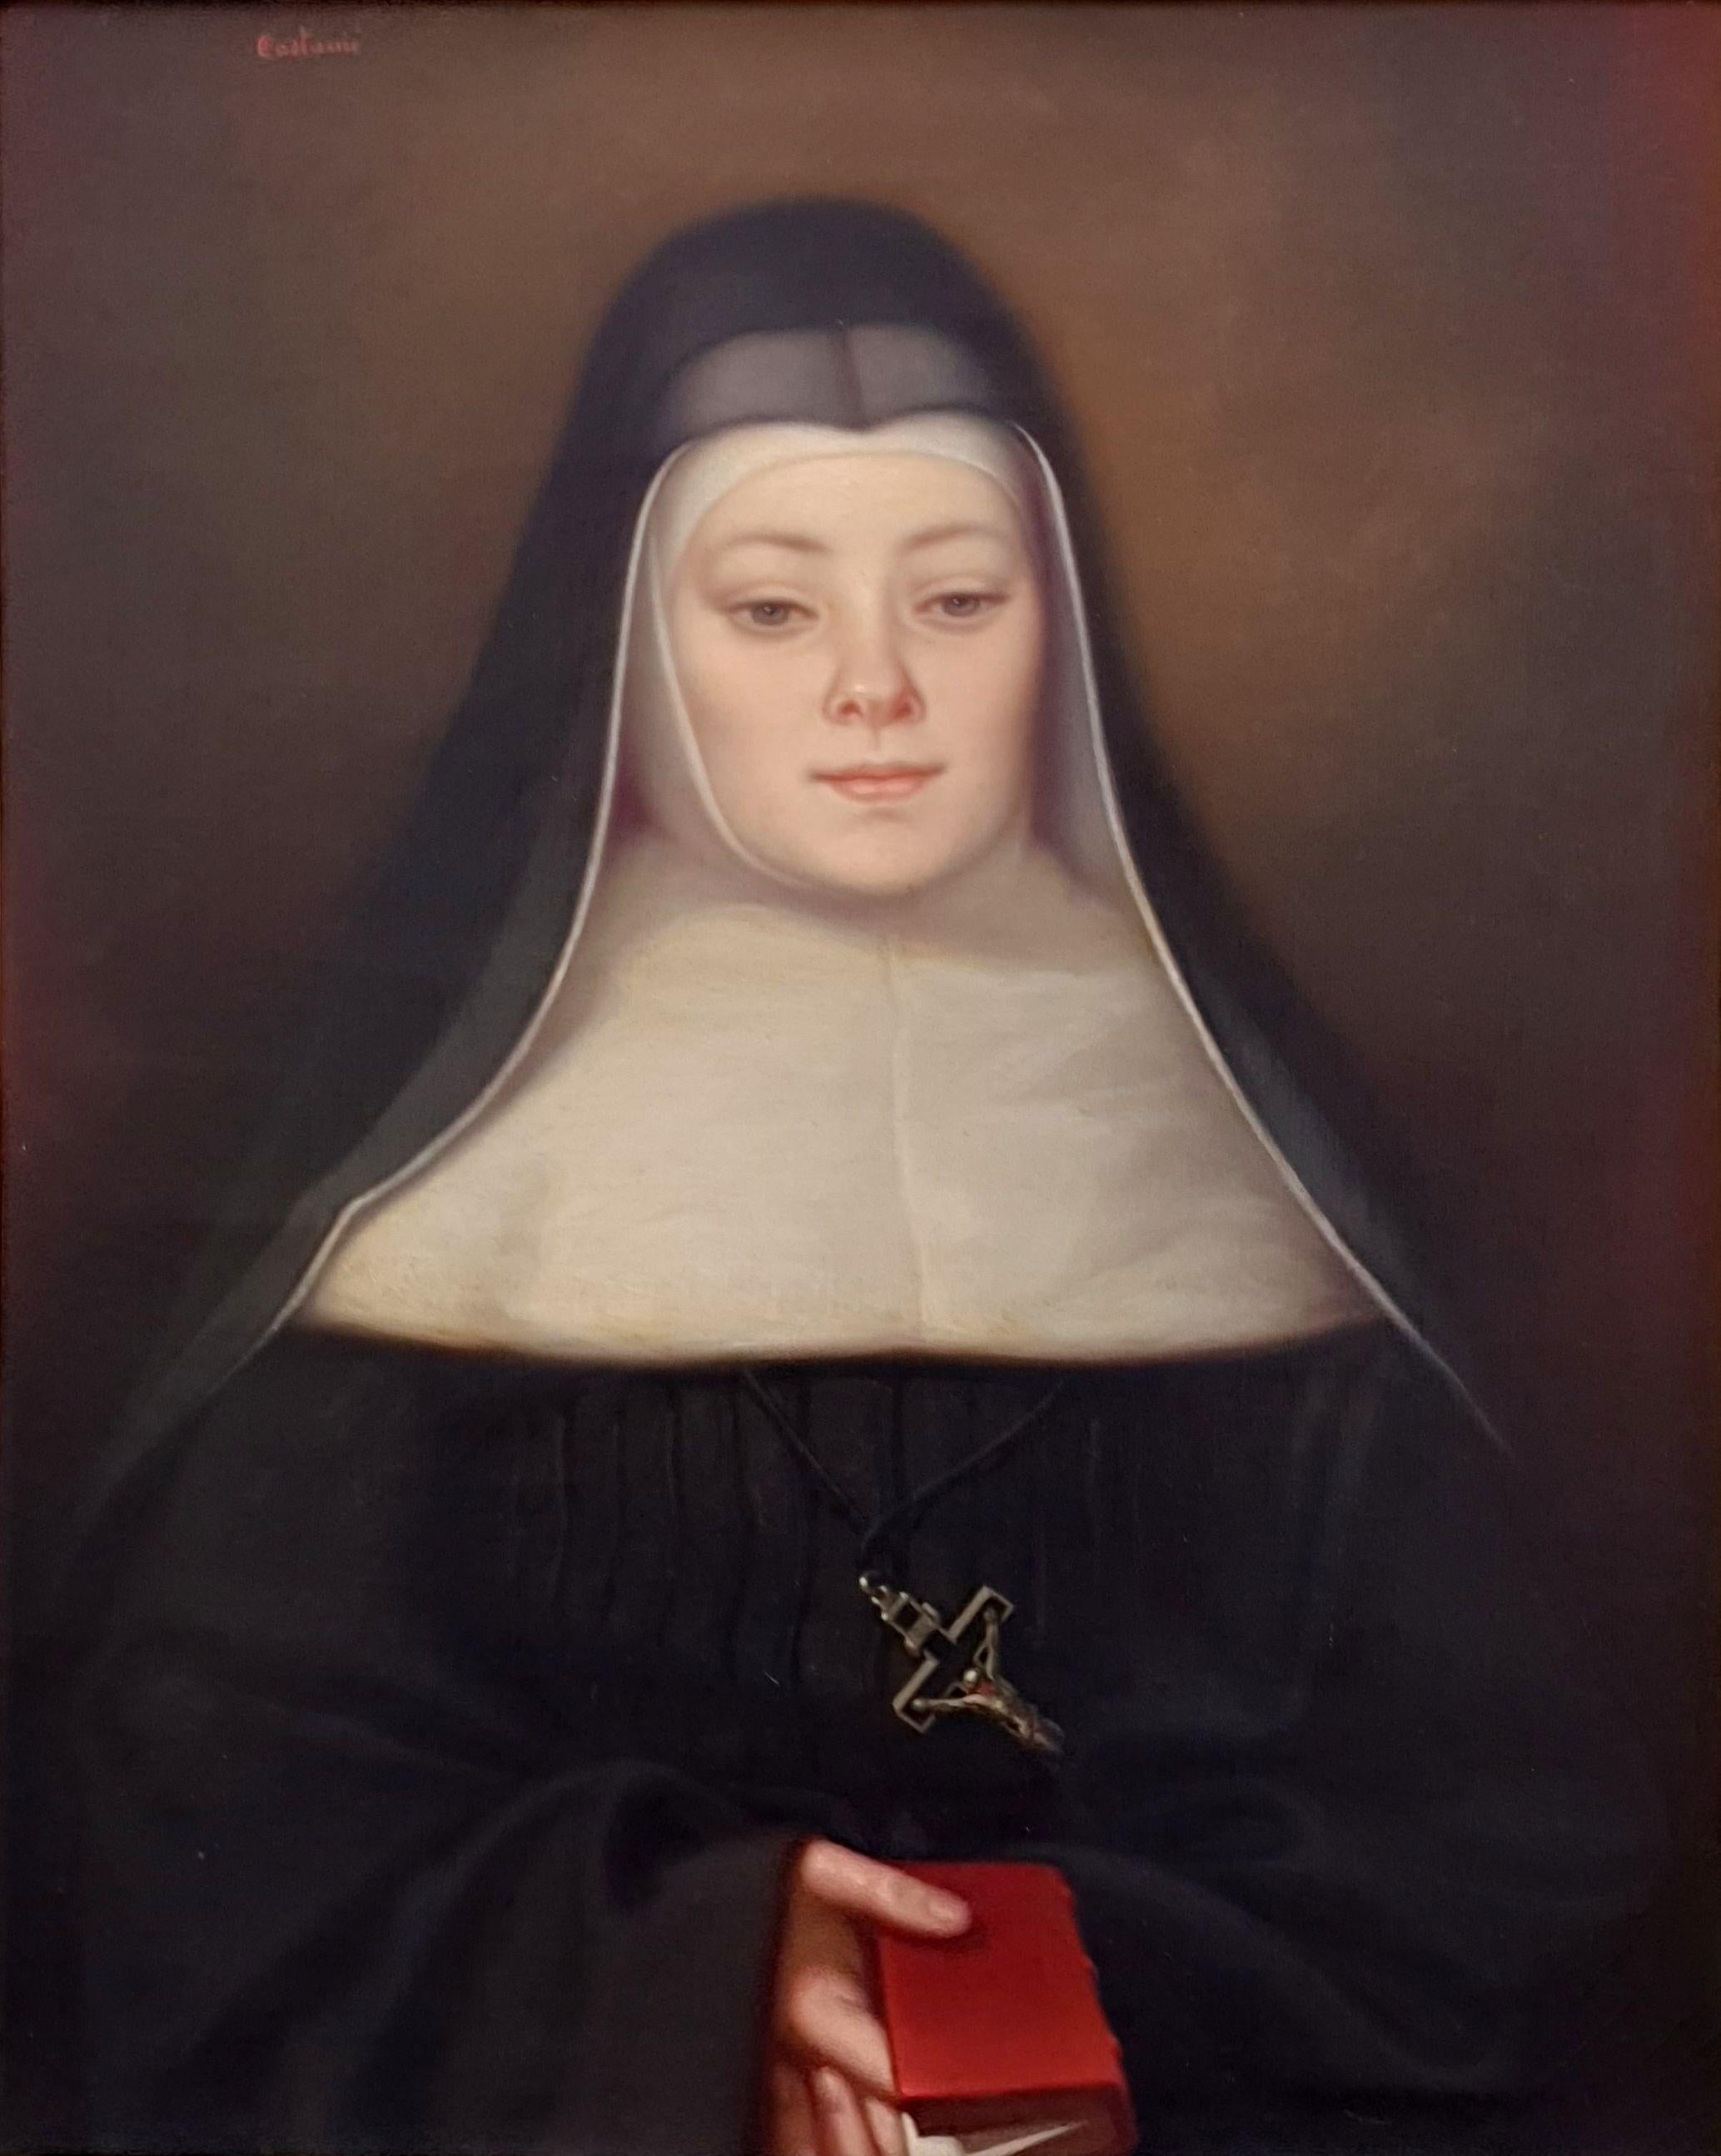 Joseph Castanié, Aveyronnais Painter, Portrait of Nun In Good Condition For Sale In BARSAC, FR